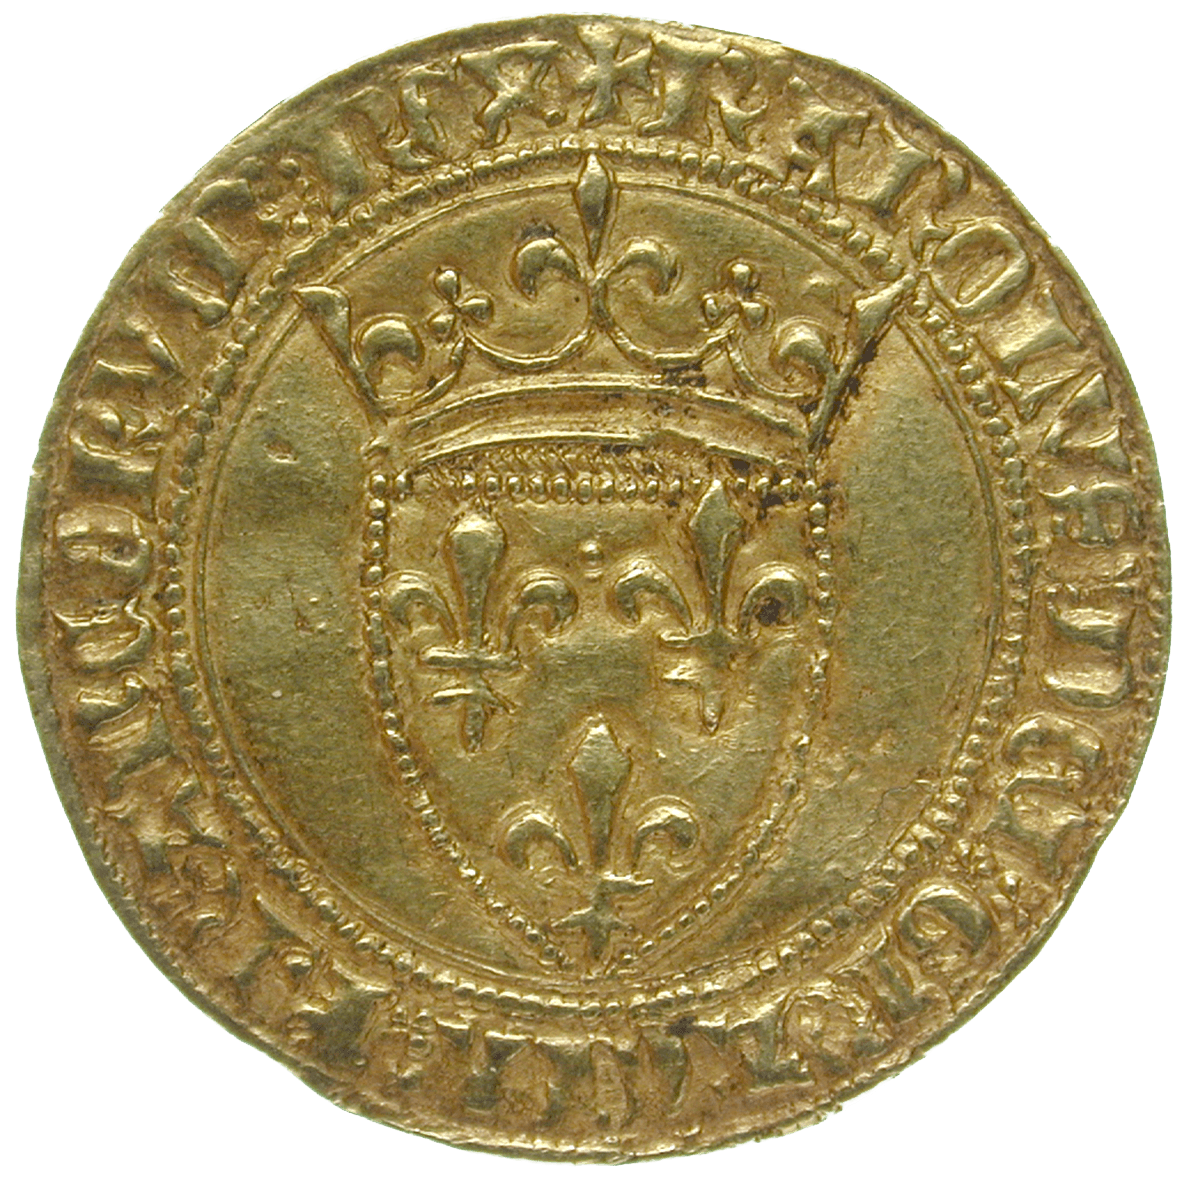 Königreich Frankreich, Karl VI., Ecu d'or à la couronne (obverse)